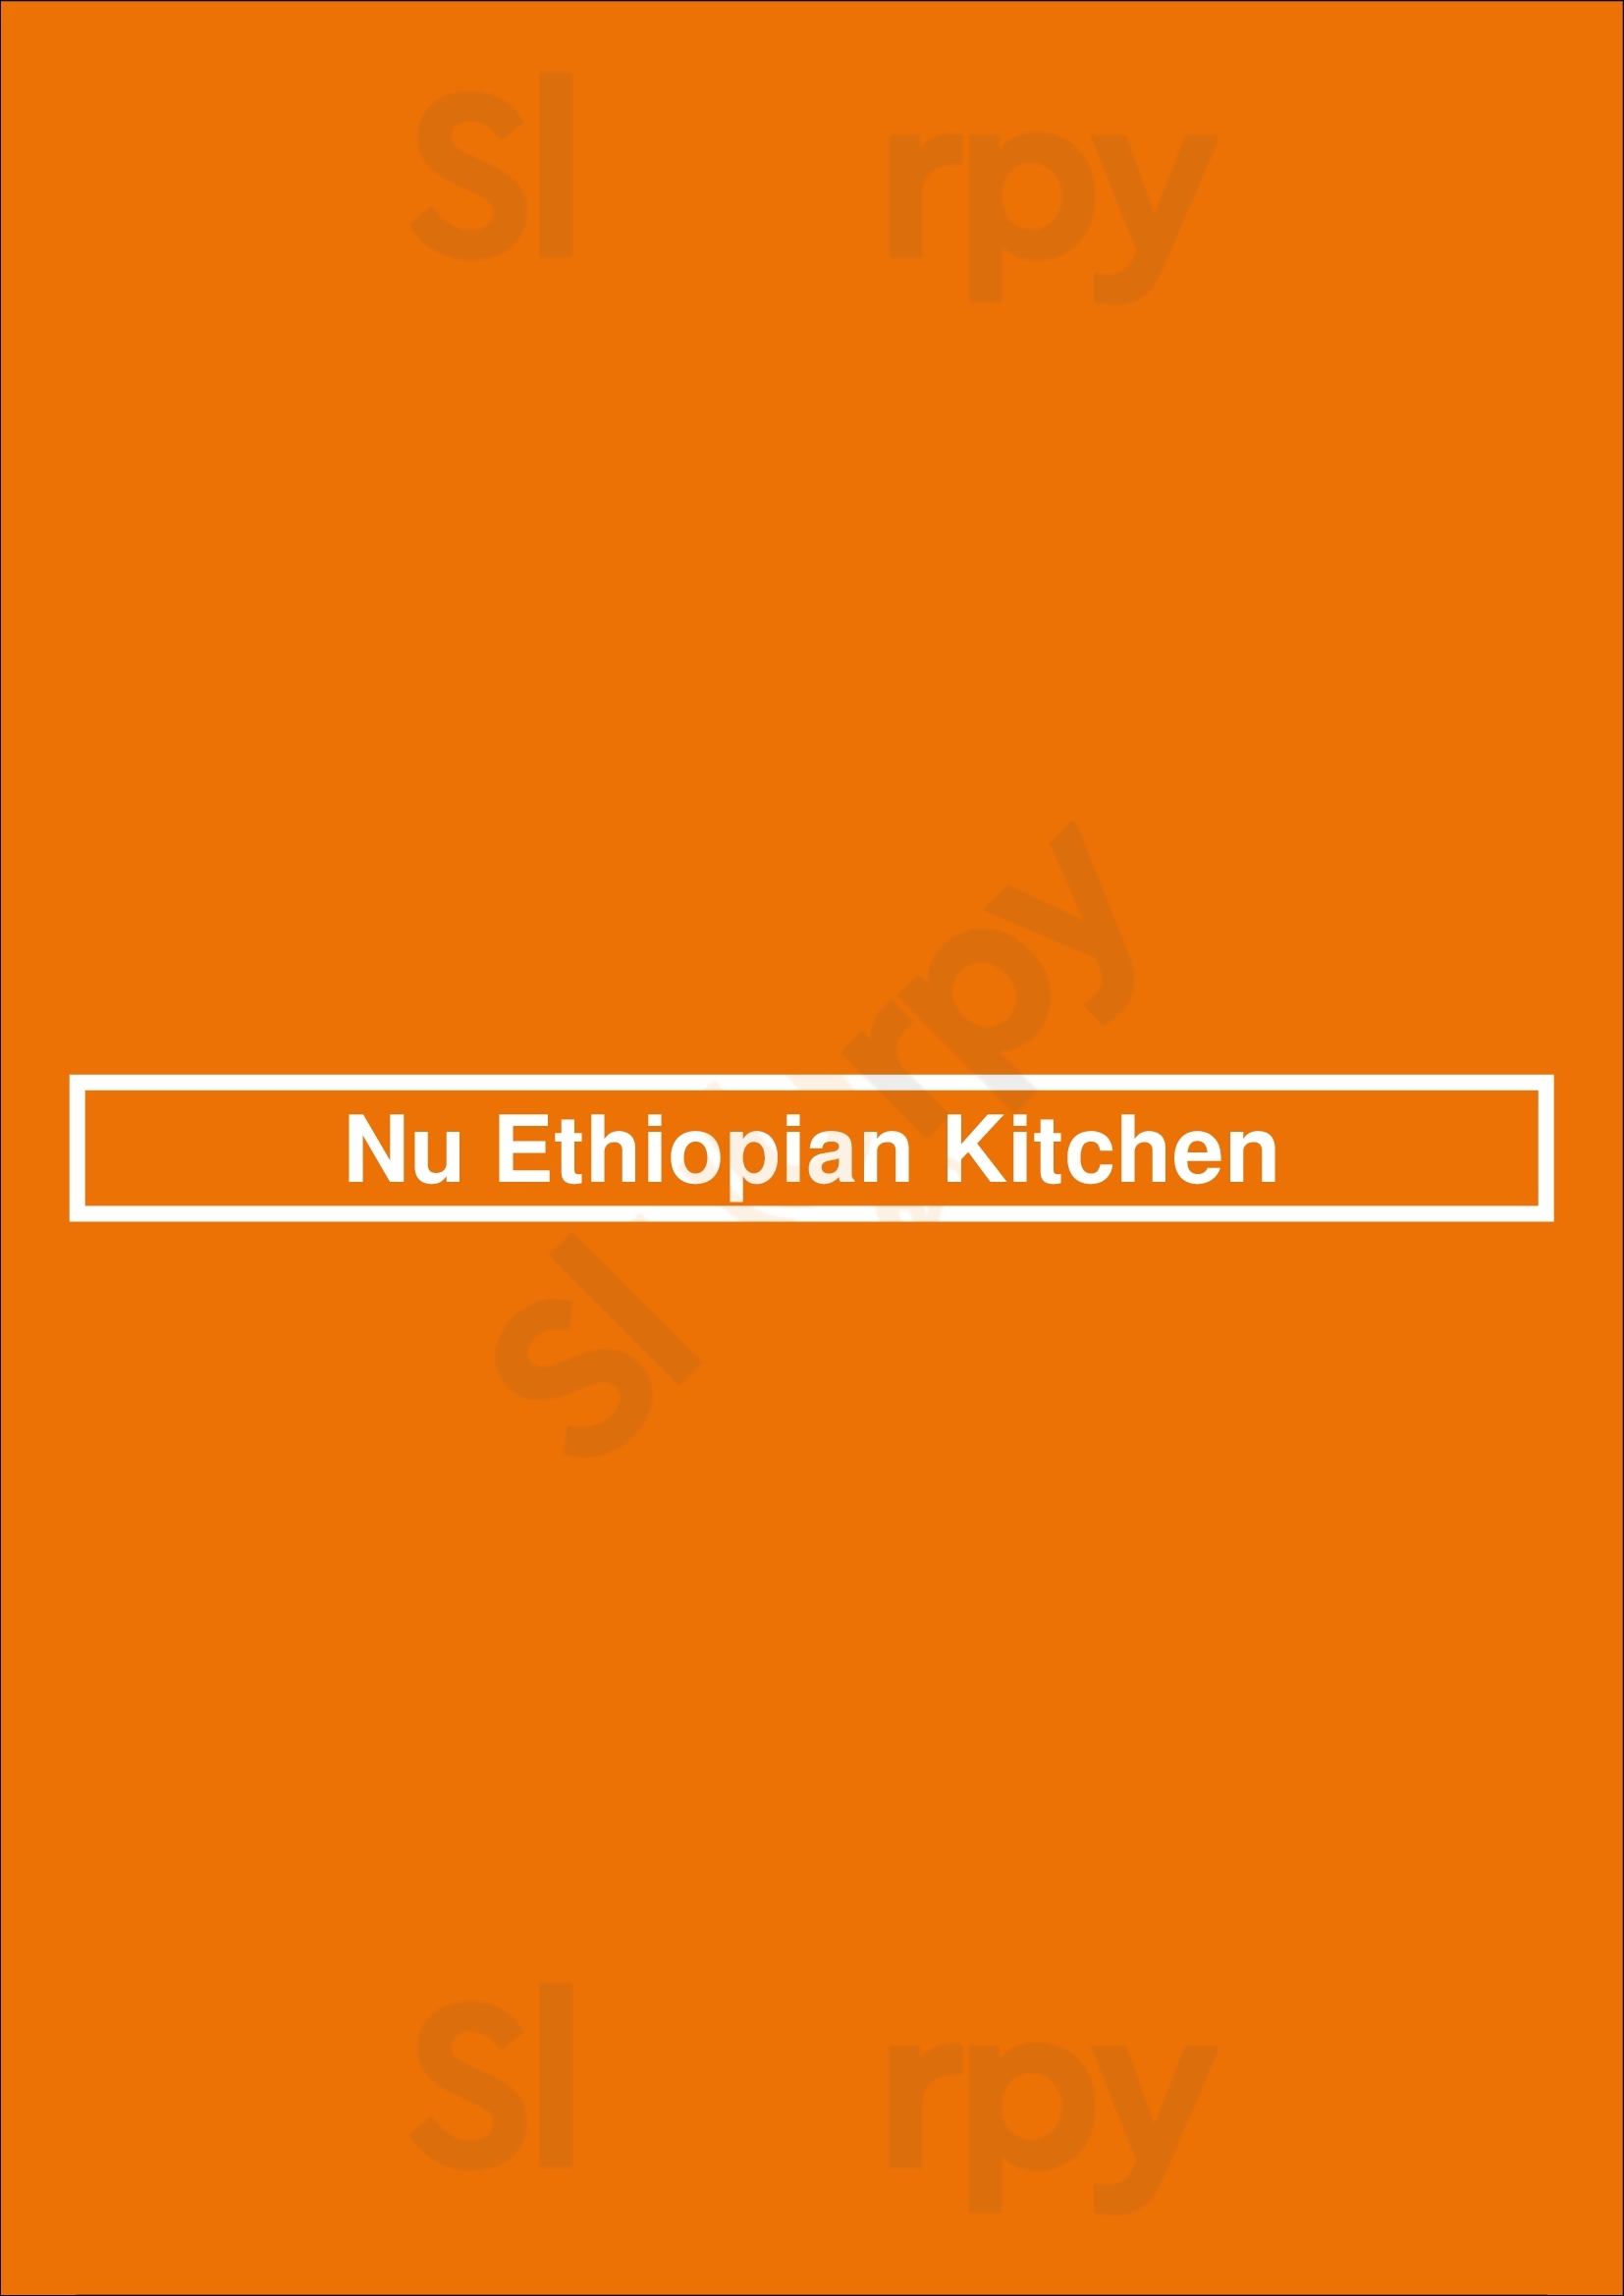 Nu Ethiopian Kitchen Las Vegas Menu - 1